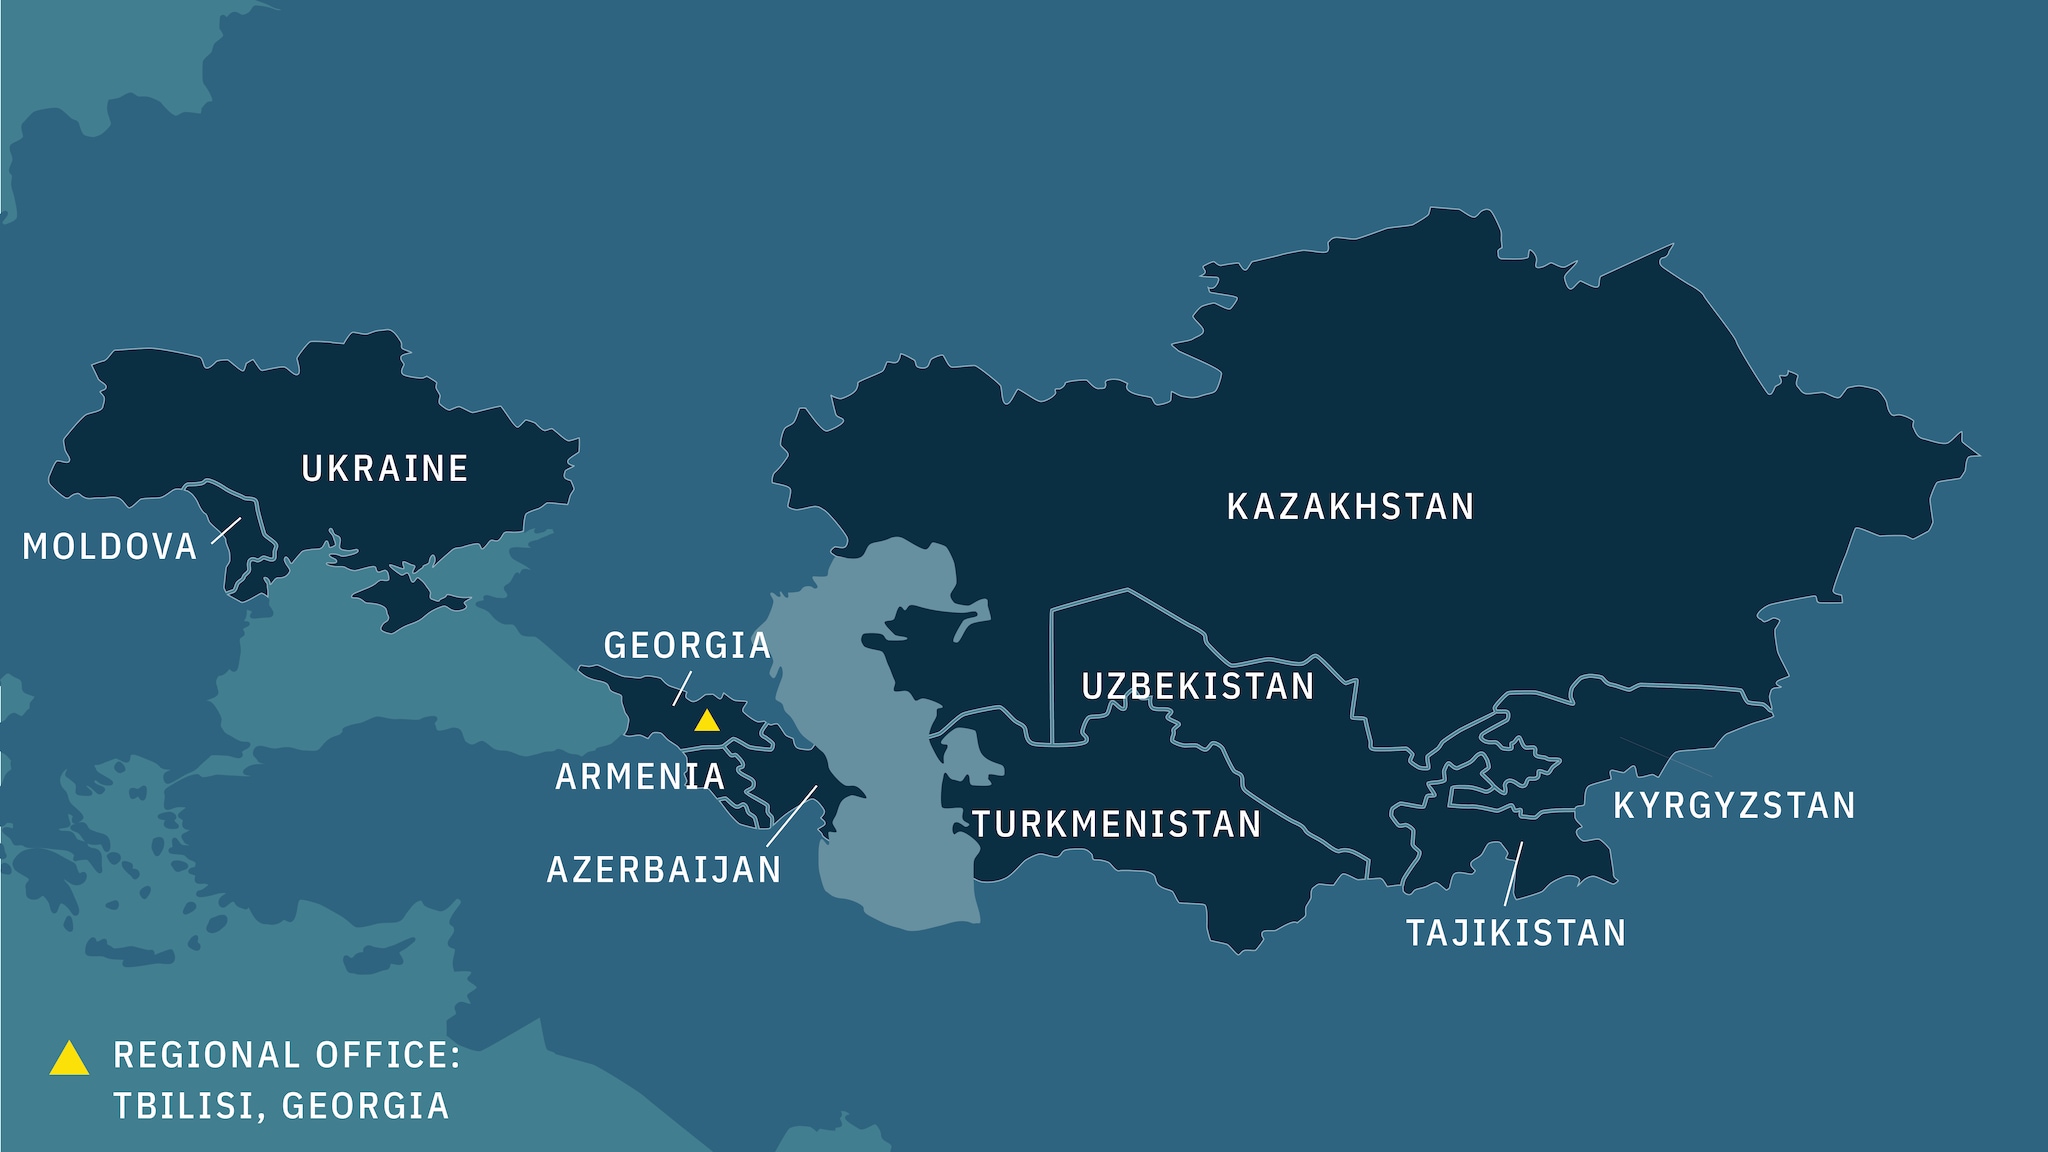 Map of countries included in the region: Armenia, Azerbaijan, Georgia, Kazakhstan, Kyrgyzstan, Moldova, Tajikistan, Turkmenistan, Ukraine, Uzbekistan